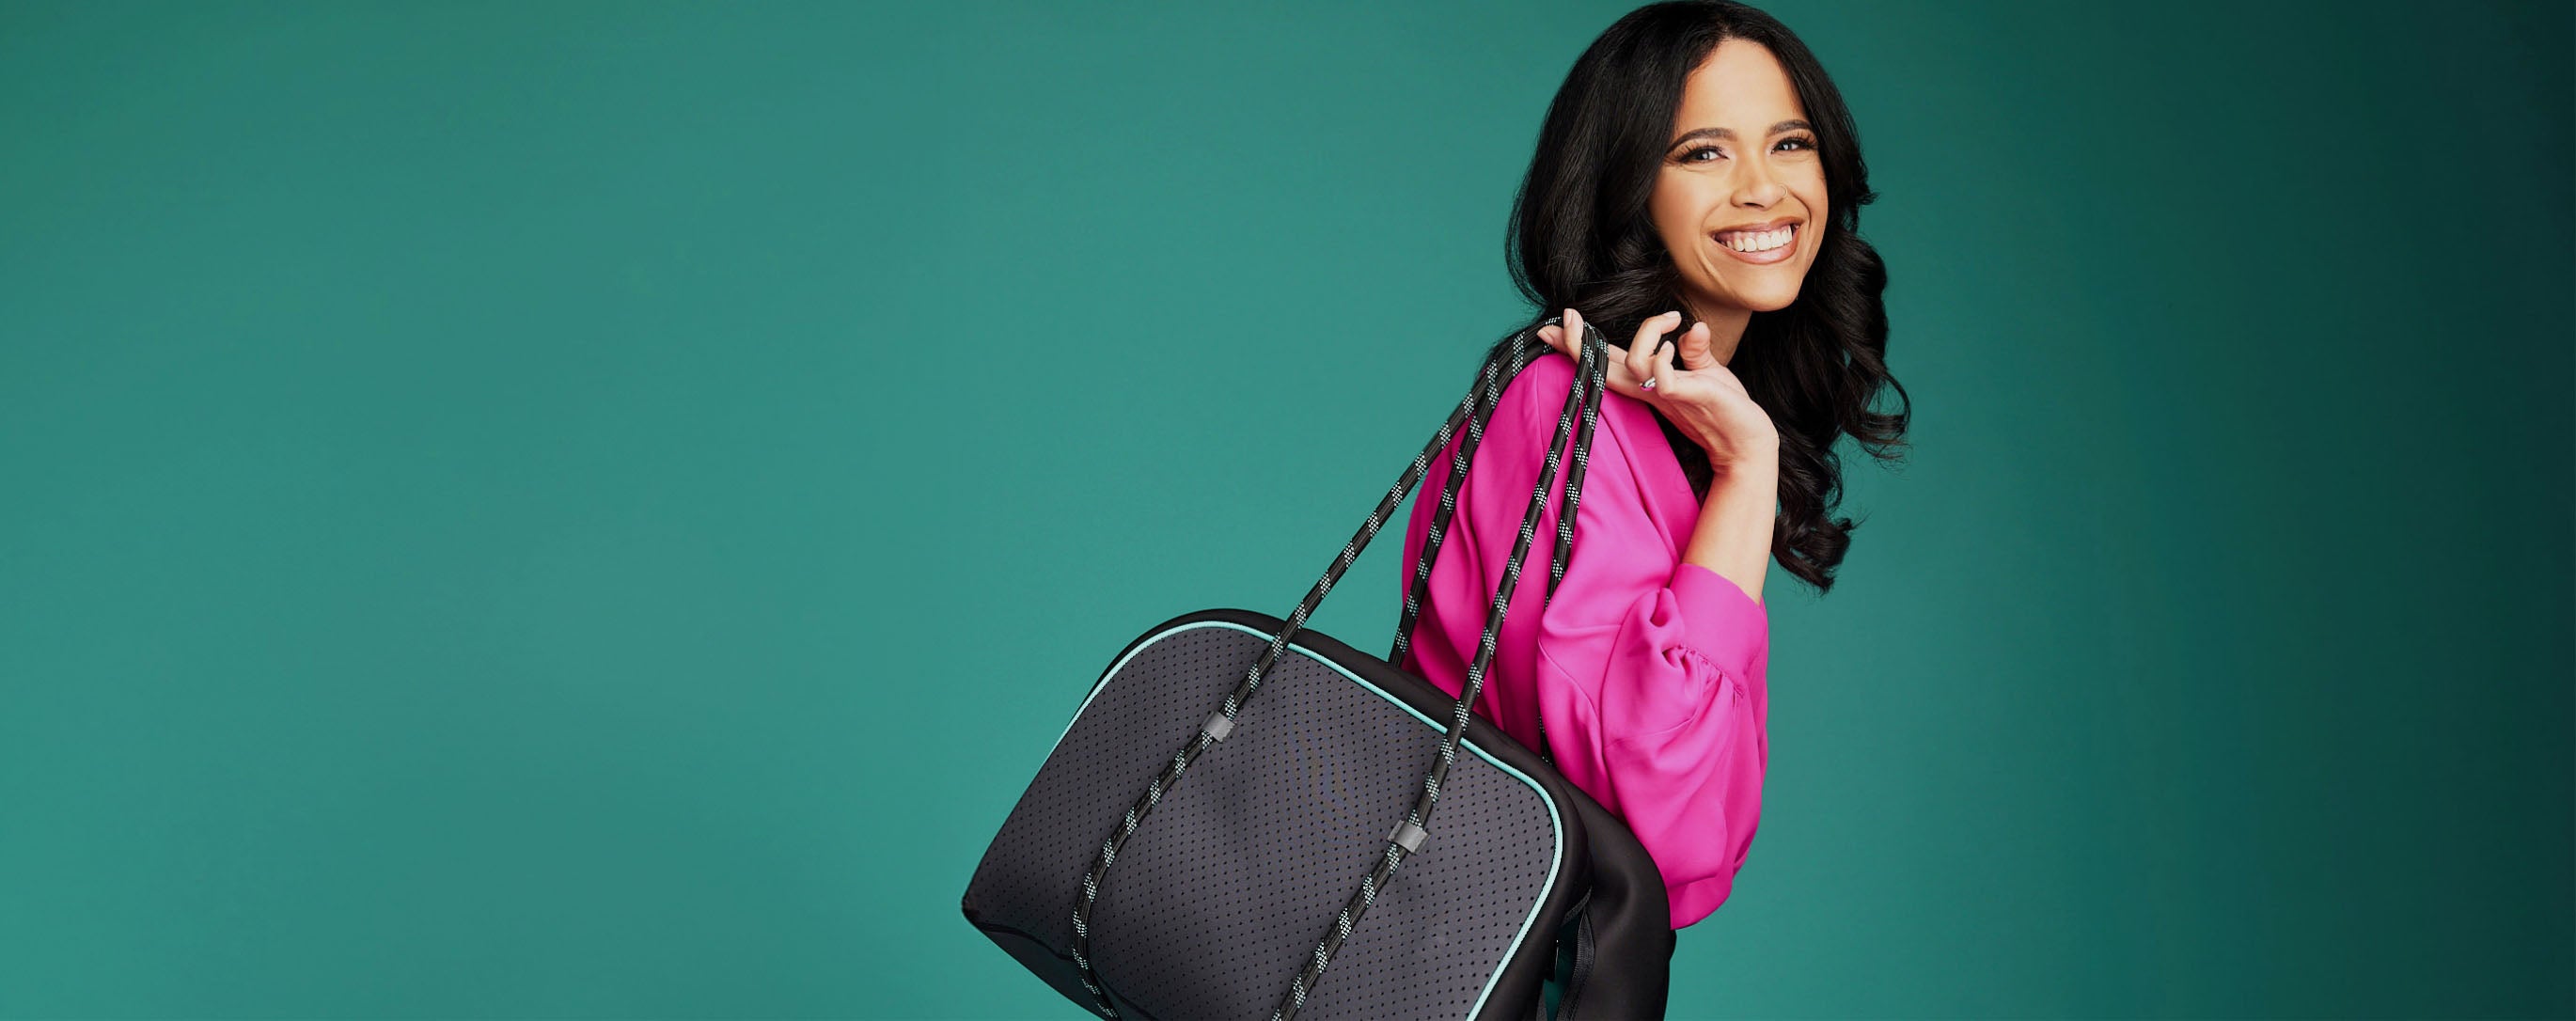 Smiling woman carrying the RevAir Weekender Bag slung over shoulder